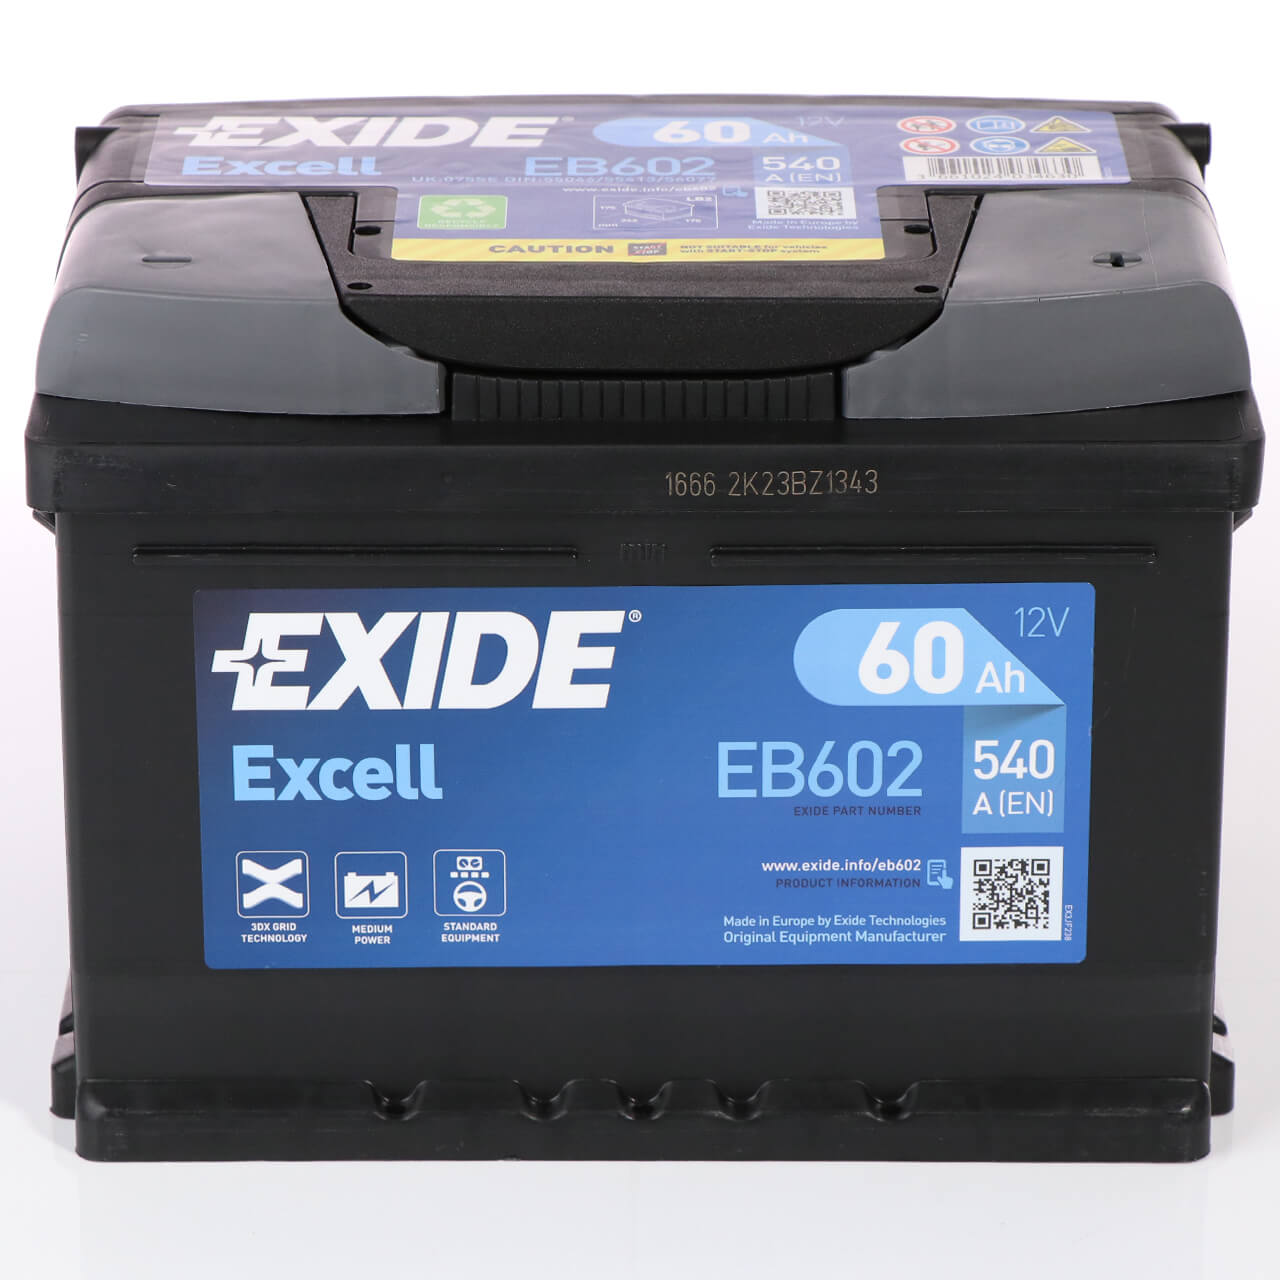 EB602 EXIDE EXCELL 075SE Batterie 12V 60Ah 520A B13 LB2 Bleiakkumulator  075SE, 545 19 ❱❱❱ Preis und Erfahrungen